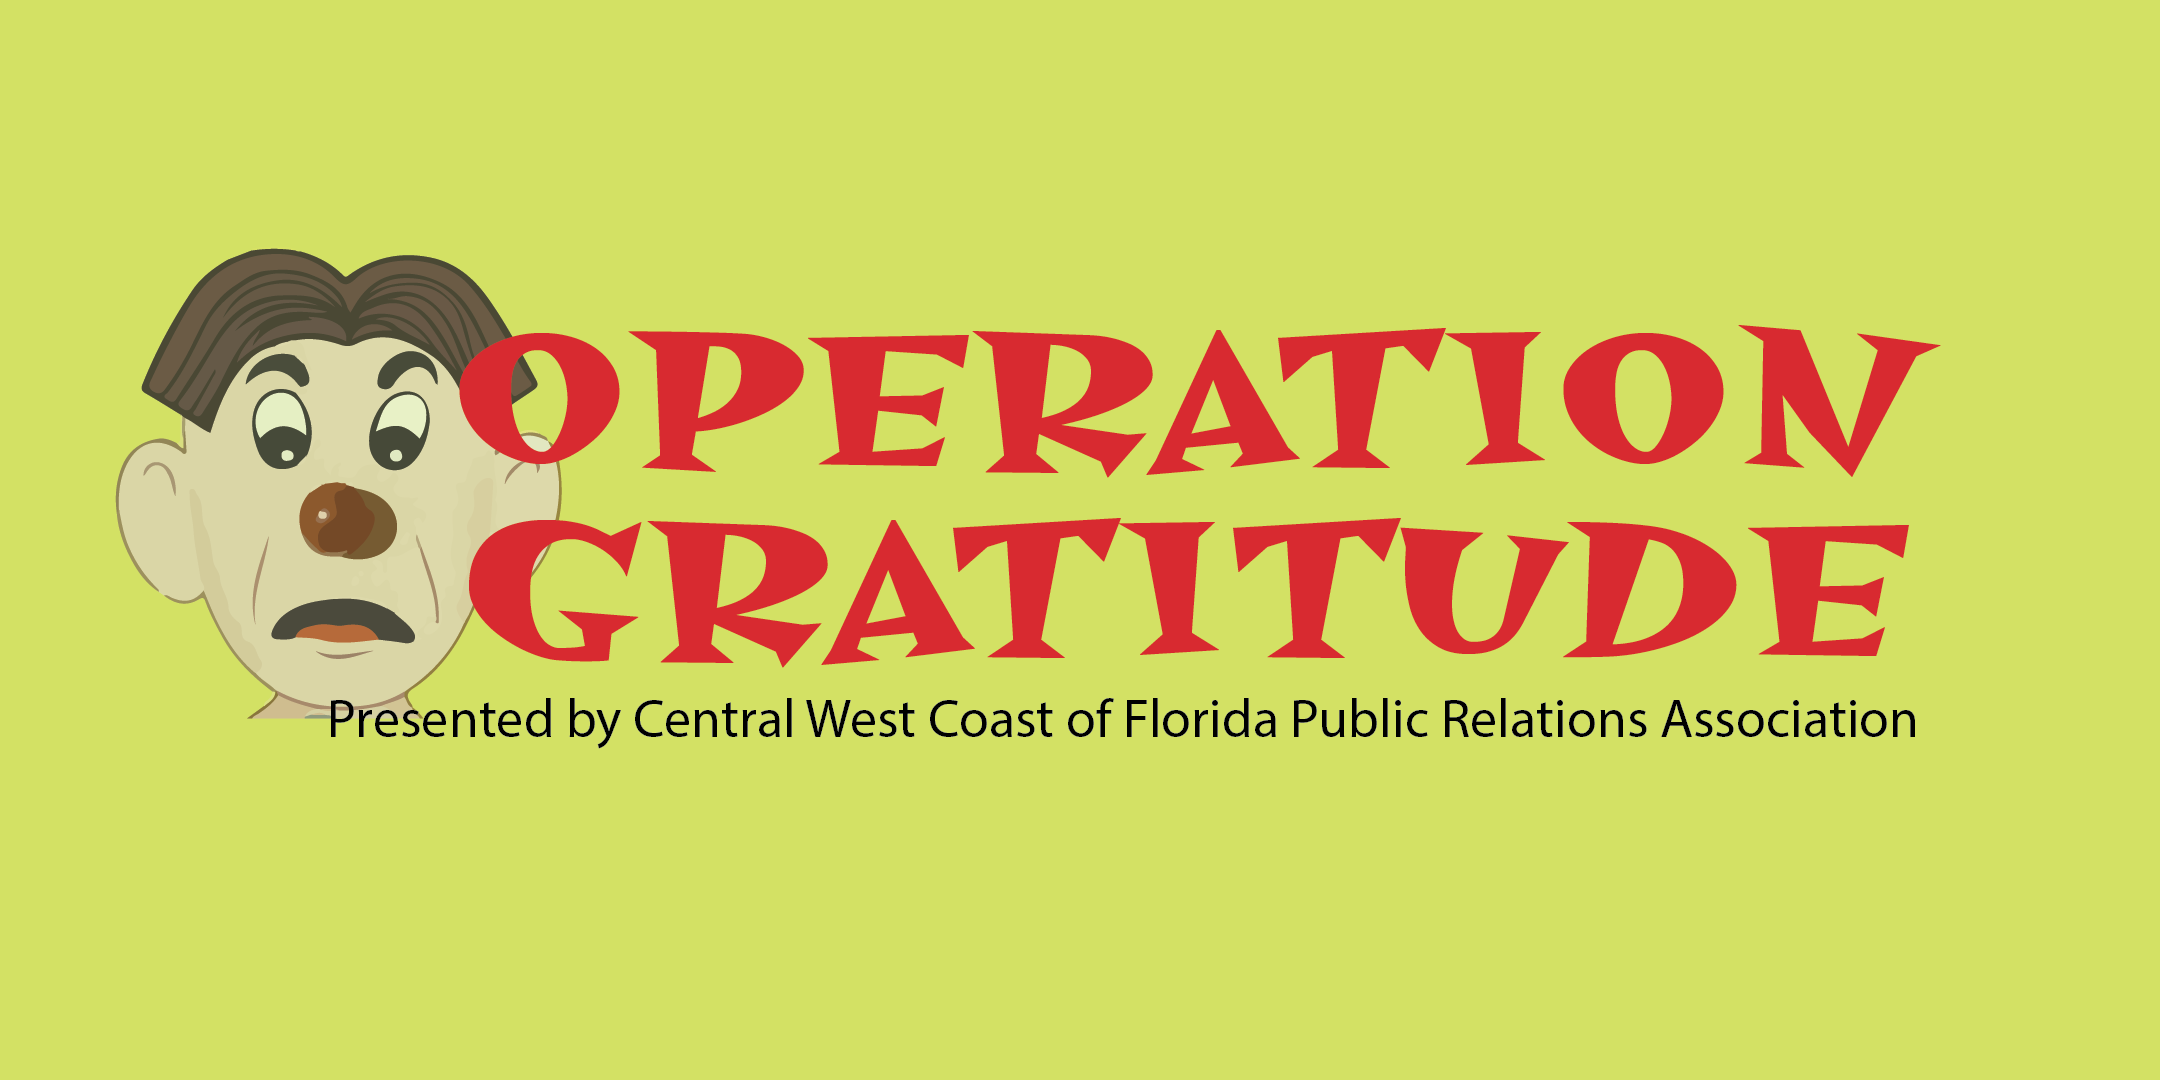 Operation Gratitude